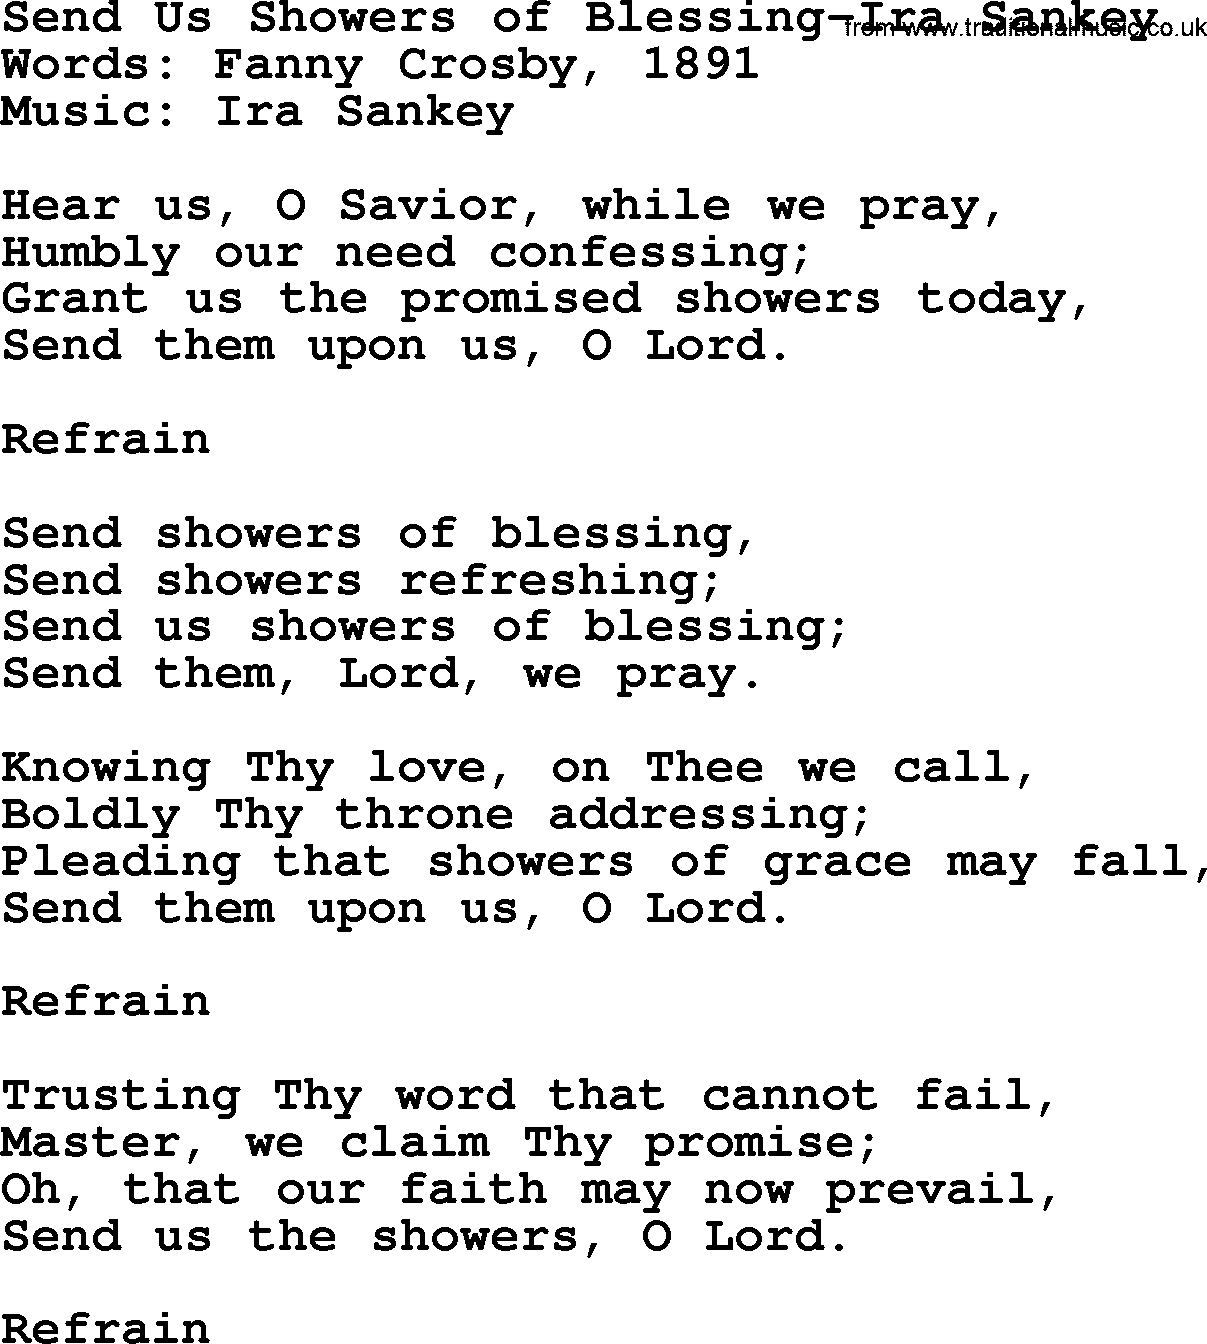 Ira Sankey hymn: Send Us Showers of Blessing-Ira Sankey, lyrics